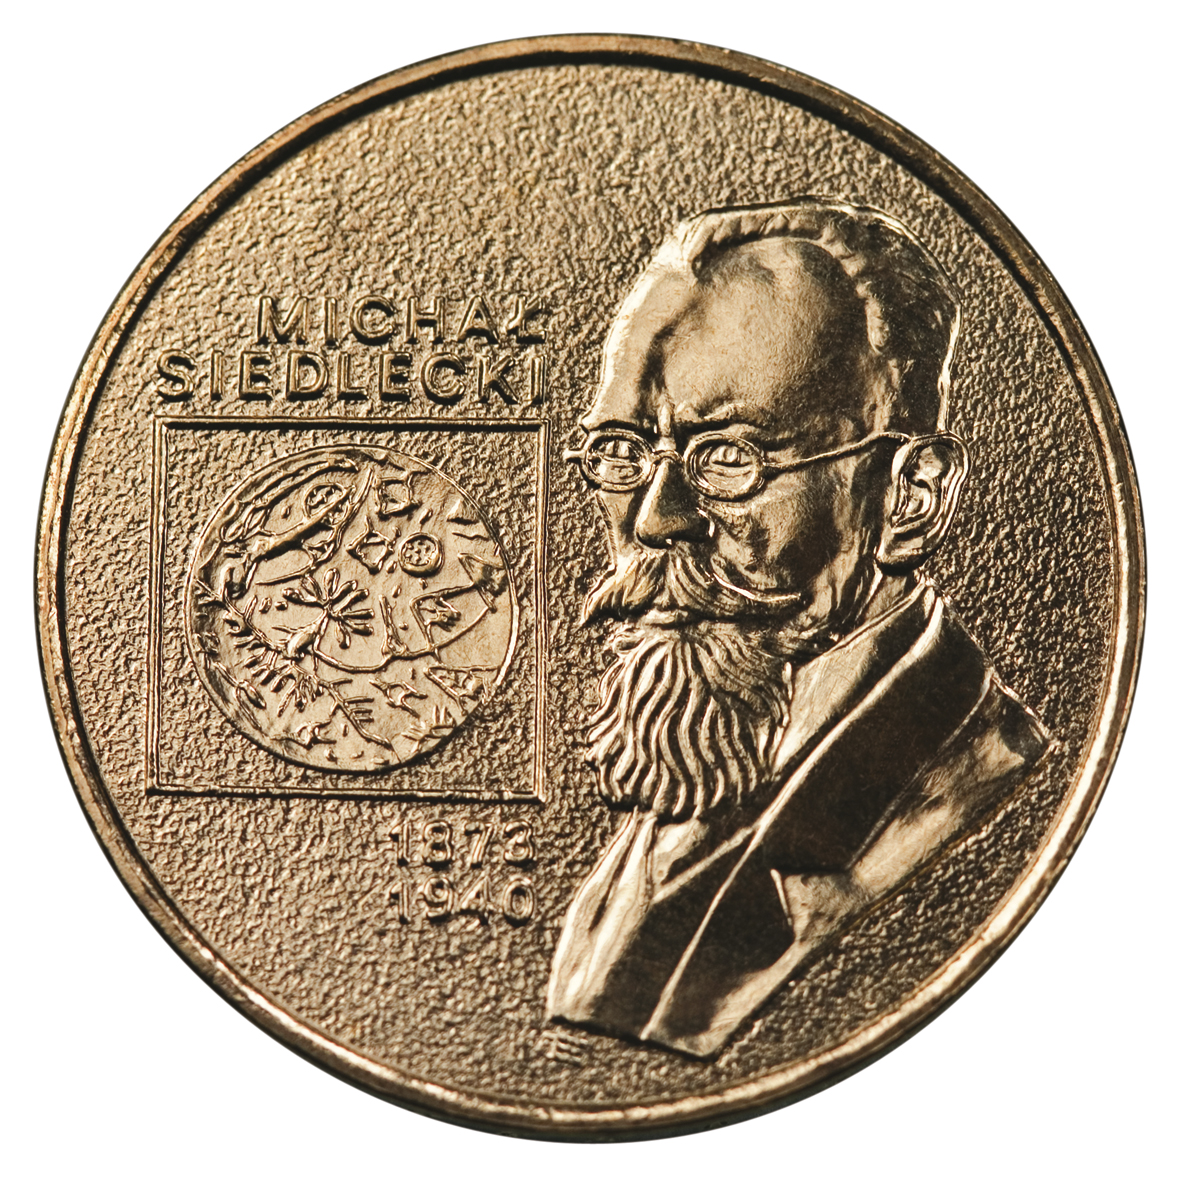 2zl-michal-siedlecki-1873-1940-rewers-monety